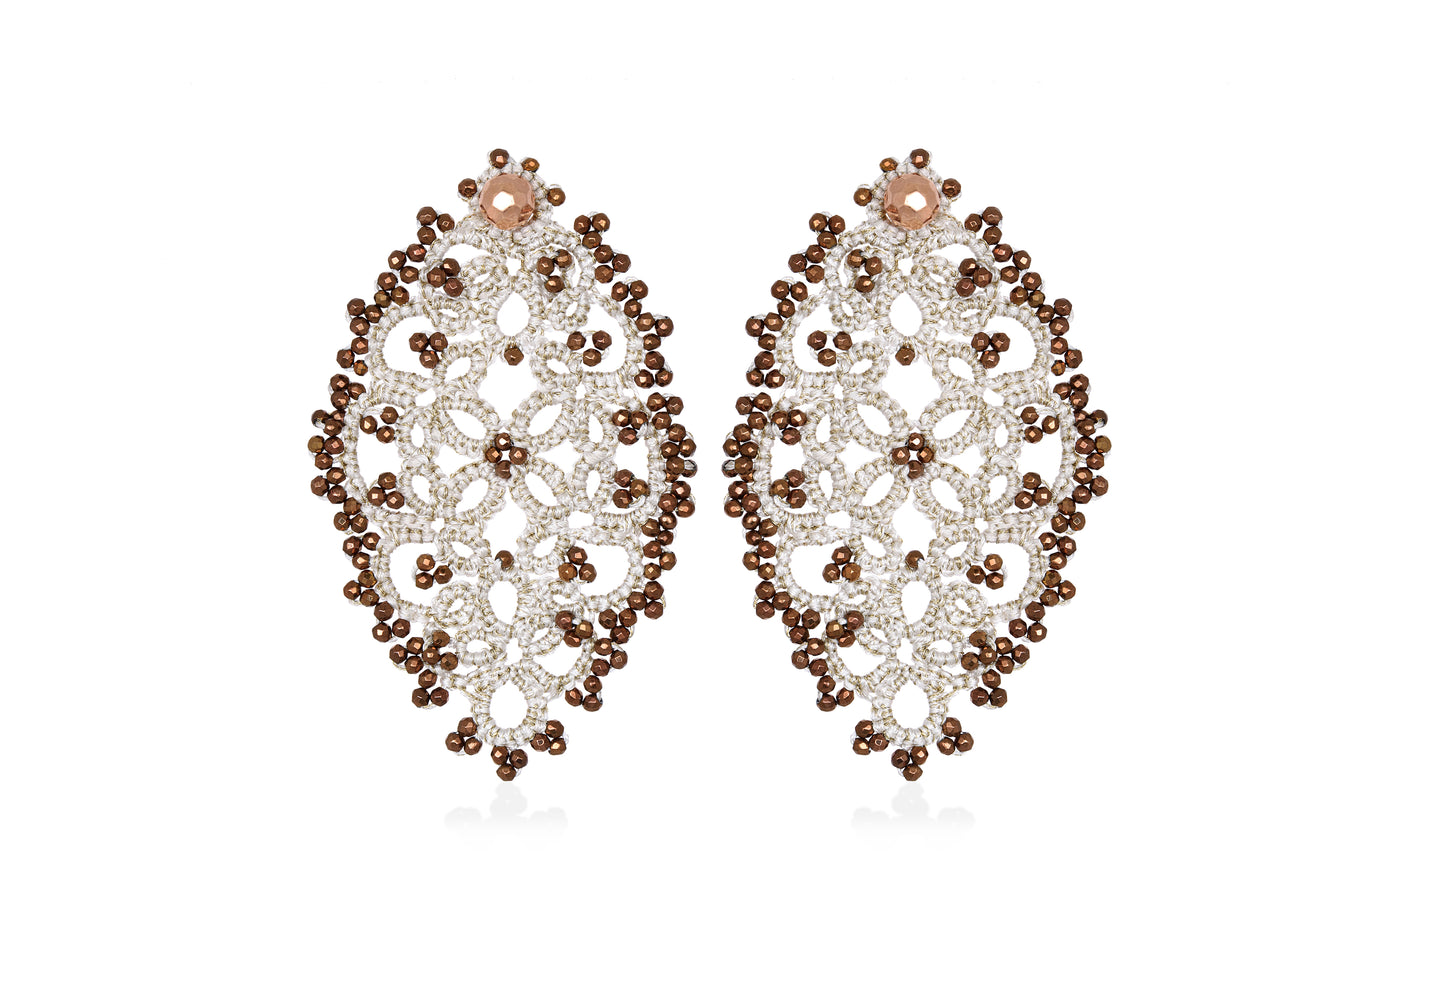 Diana lace earrings, creme bronze